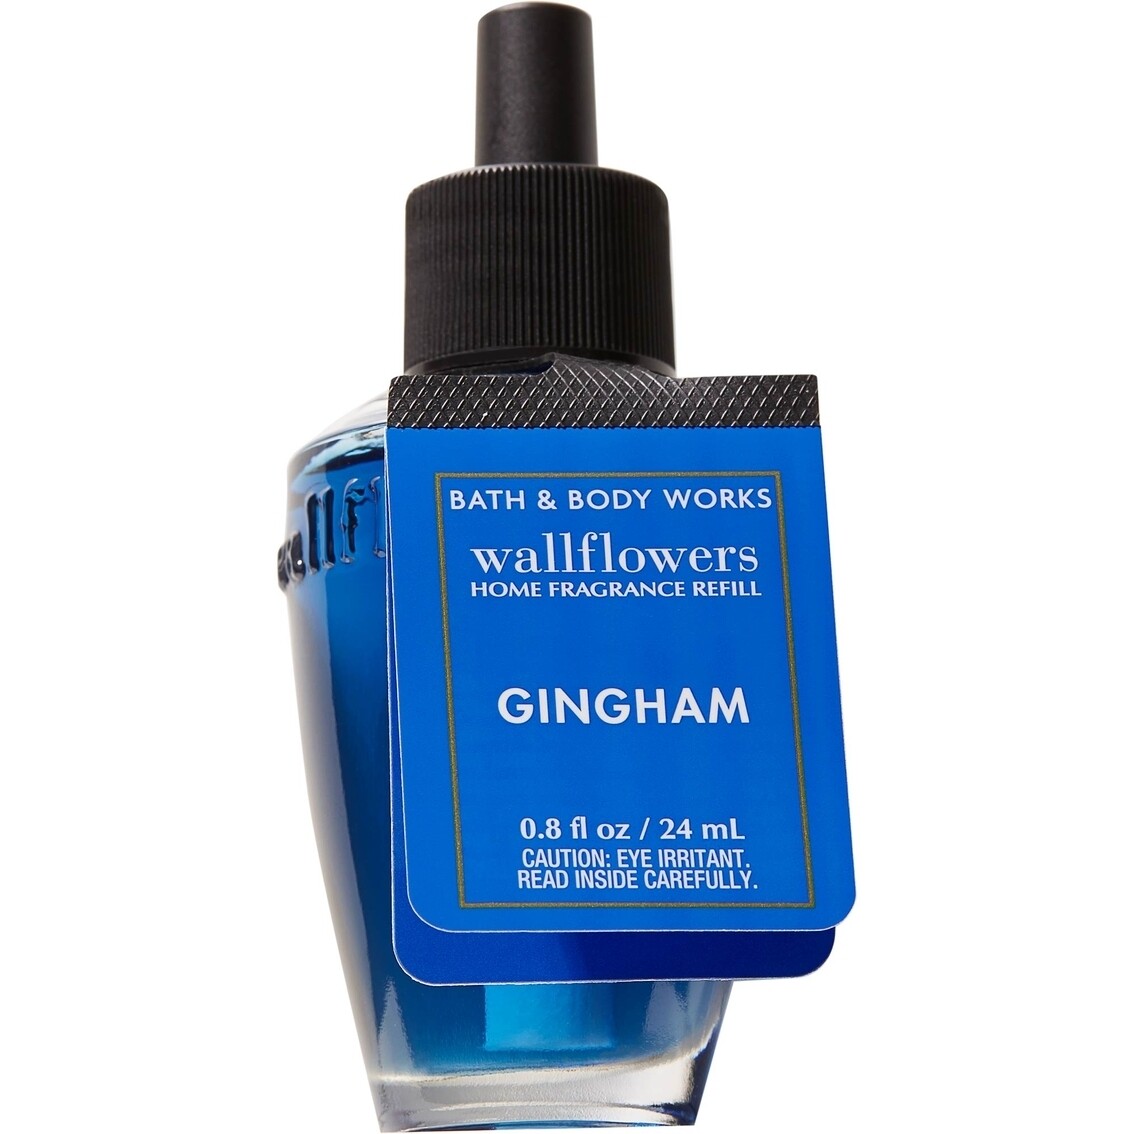 Bath and body works wallflower refill- Gingham